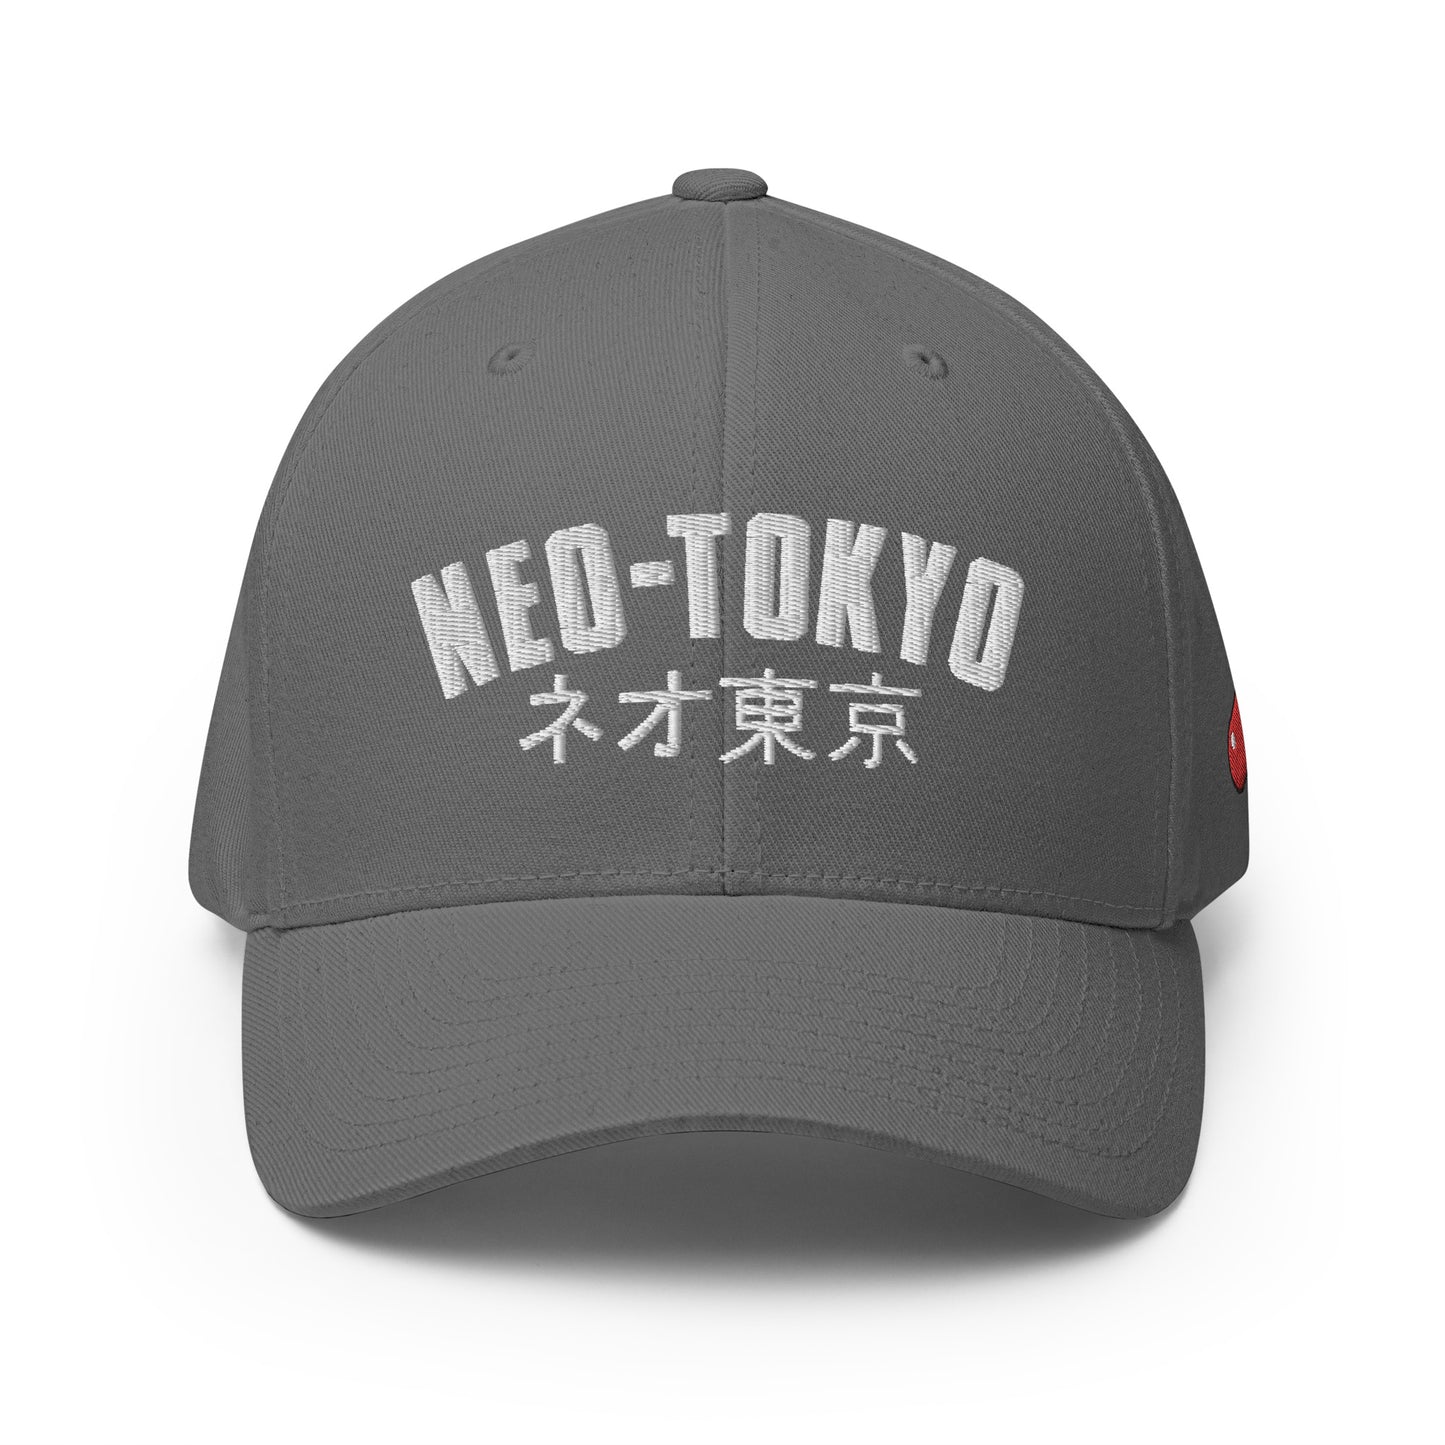 NEO-TOKYO Pride flexfit hat